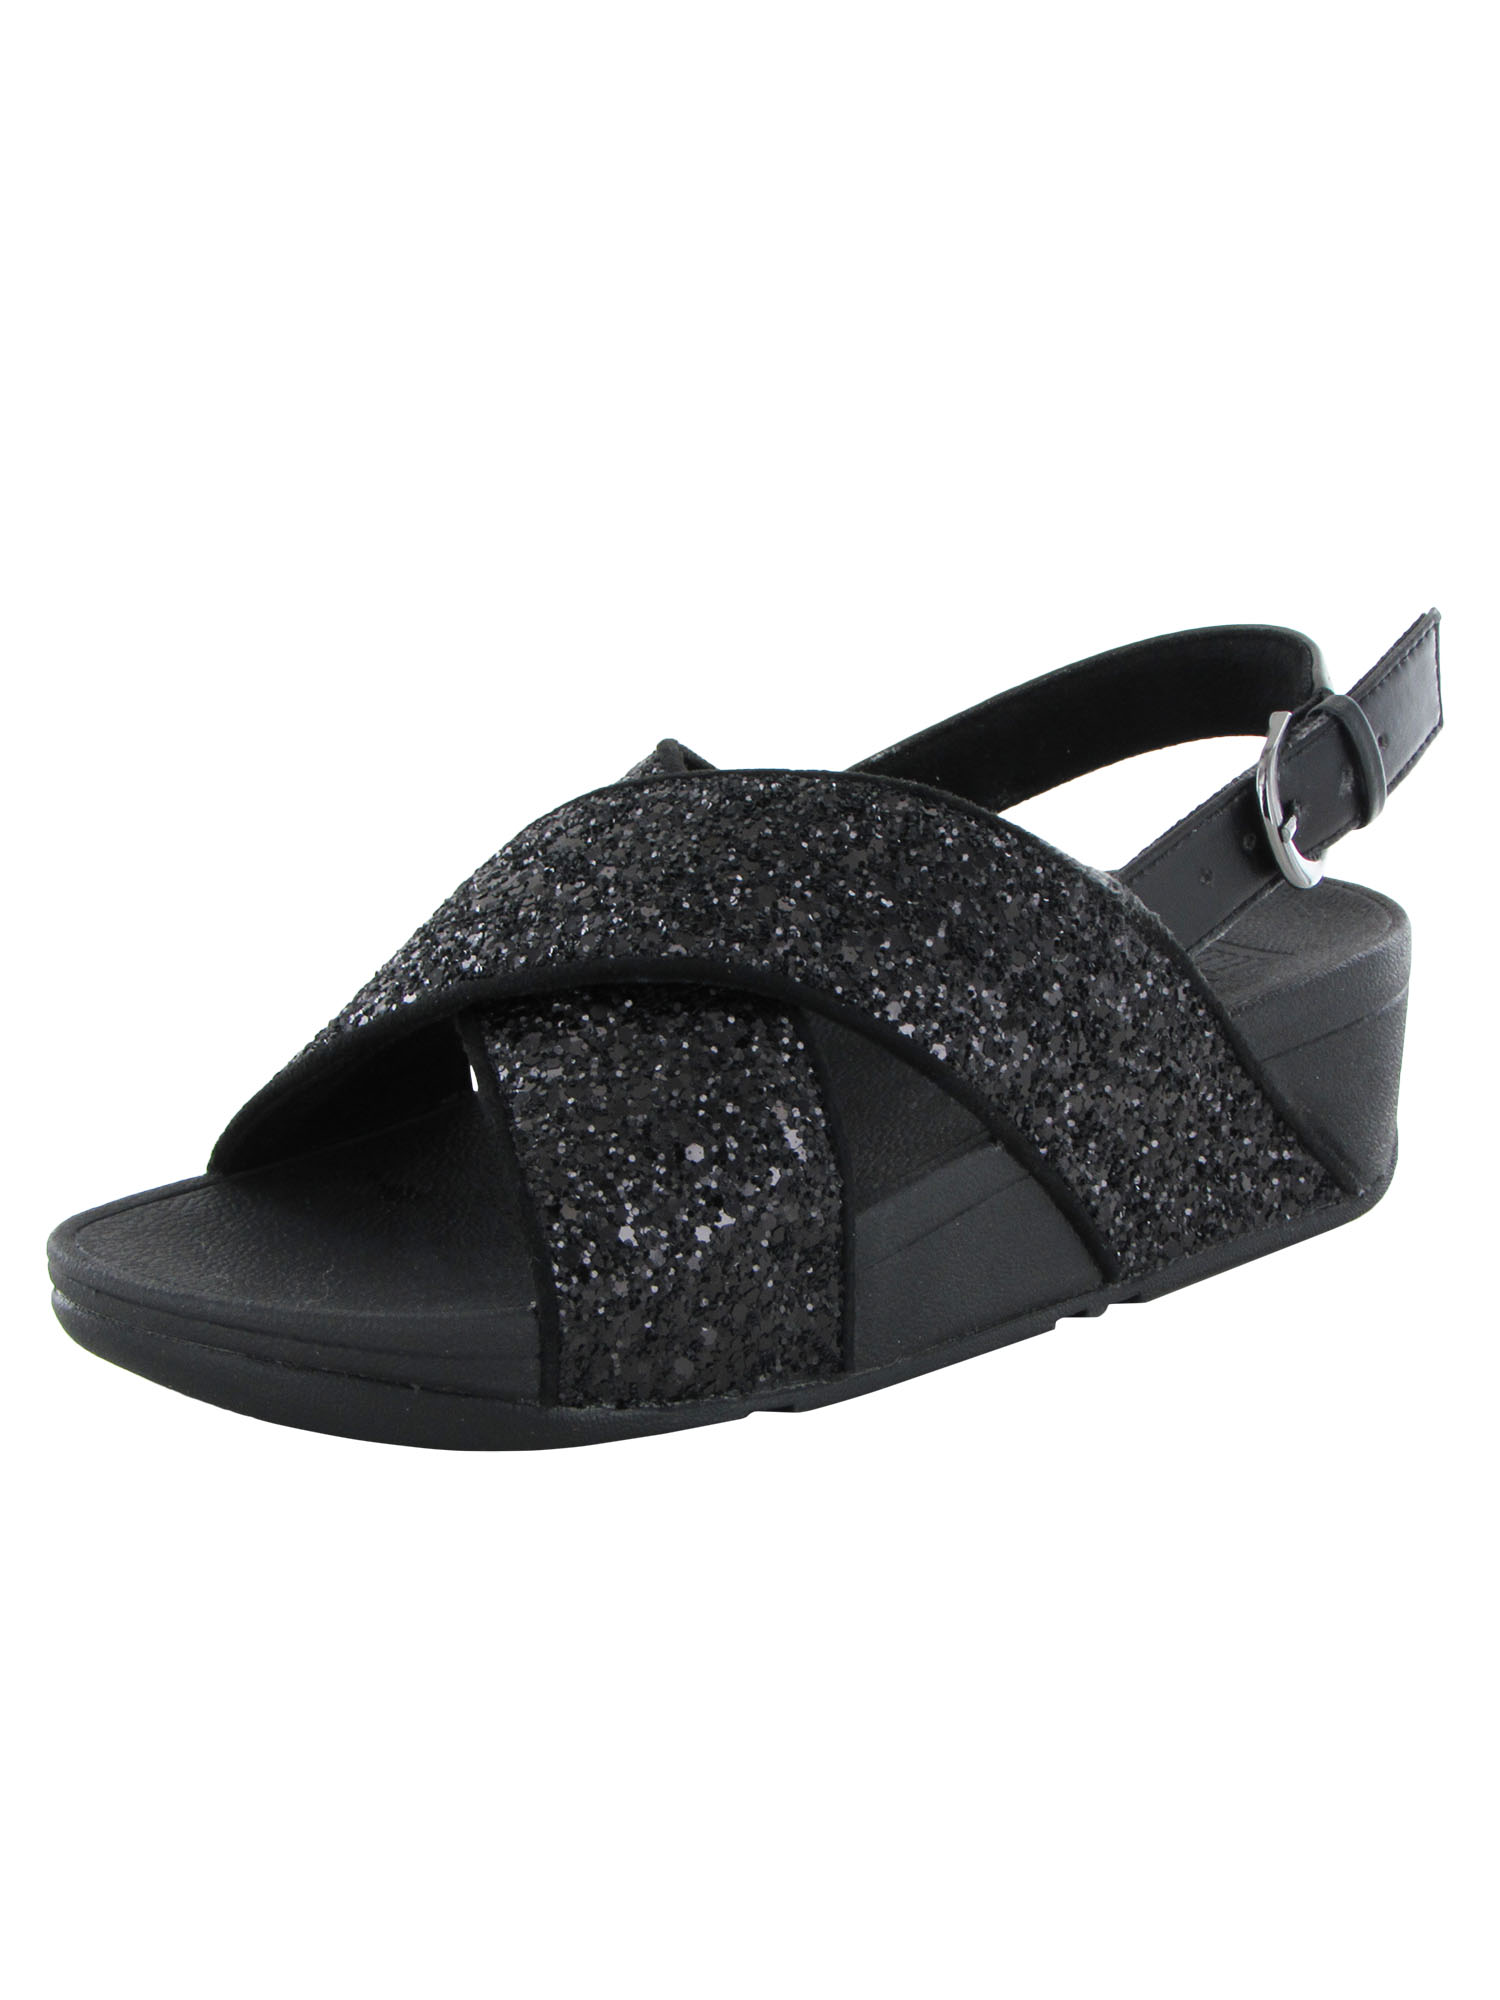 Fitflop Womens Lulu Glitter Back Strap Sandal Shoes, Black Glitter, US 9